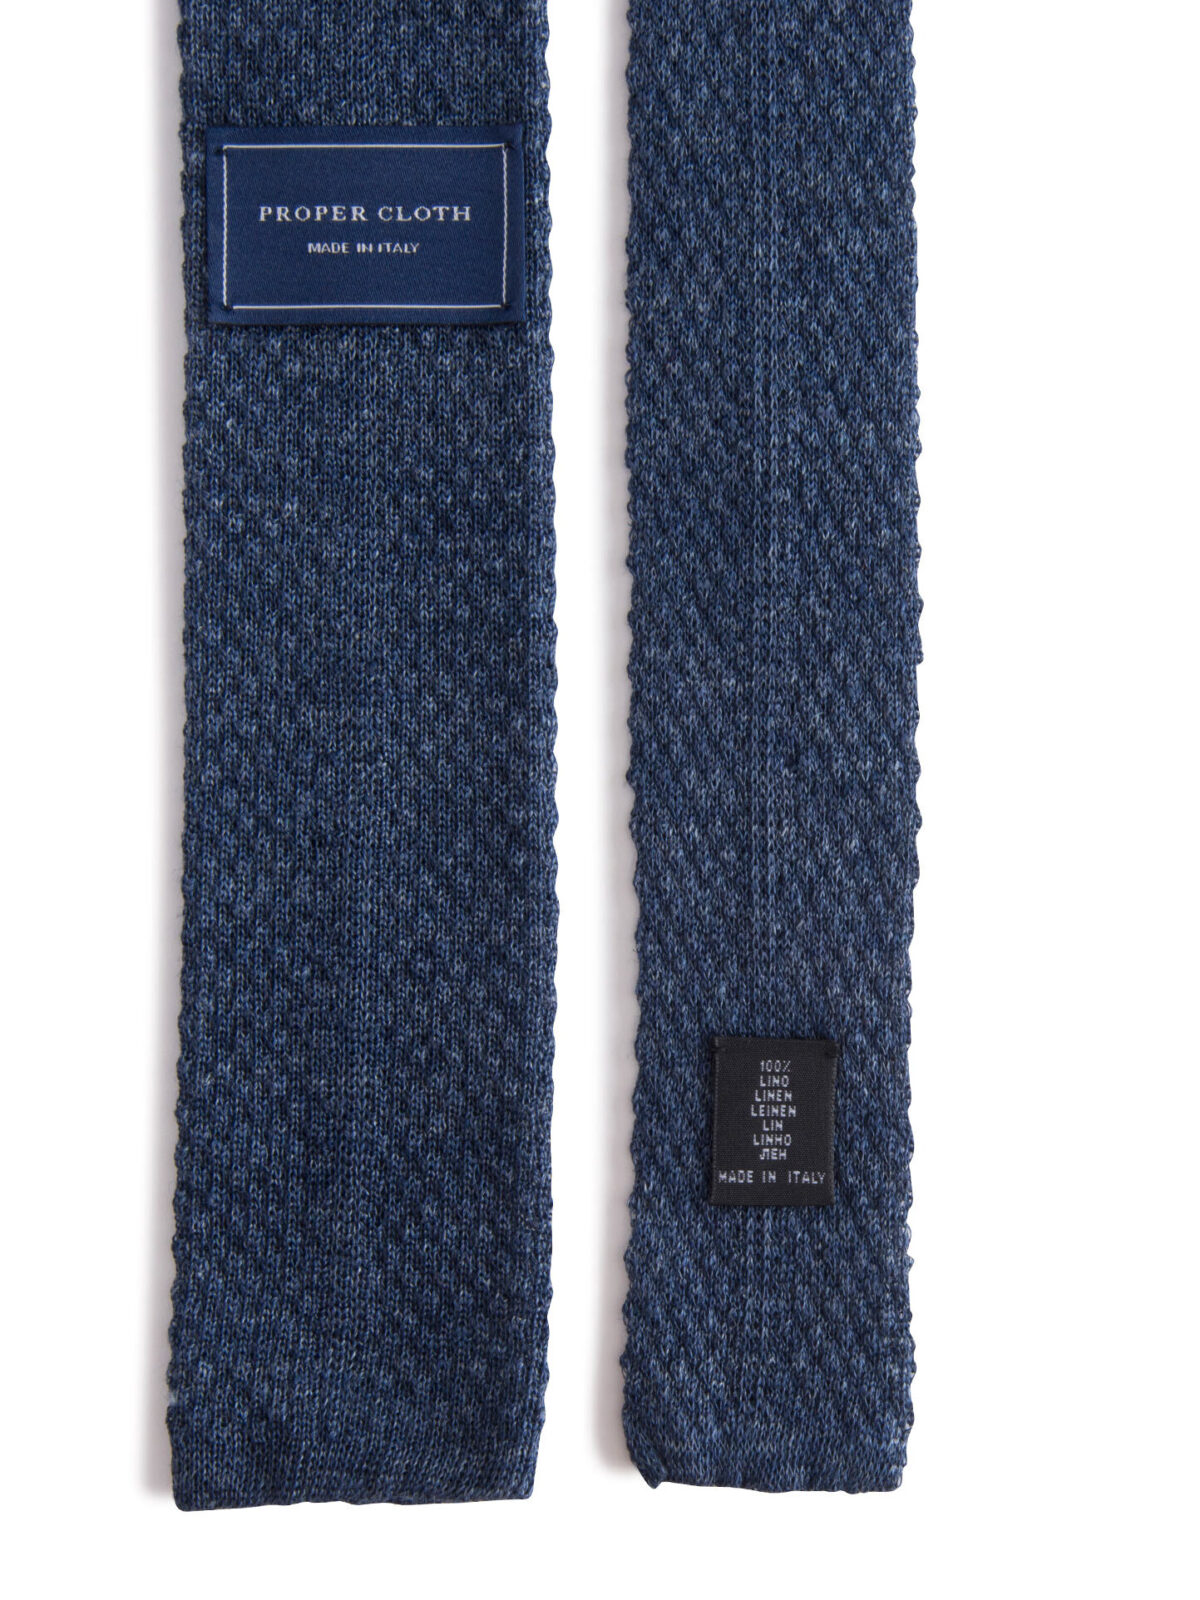 Navy Linen Knit Tie